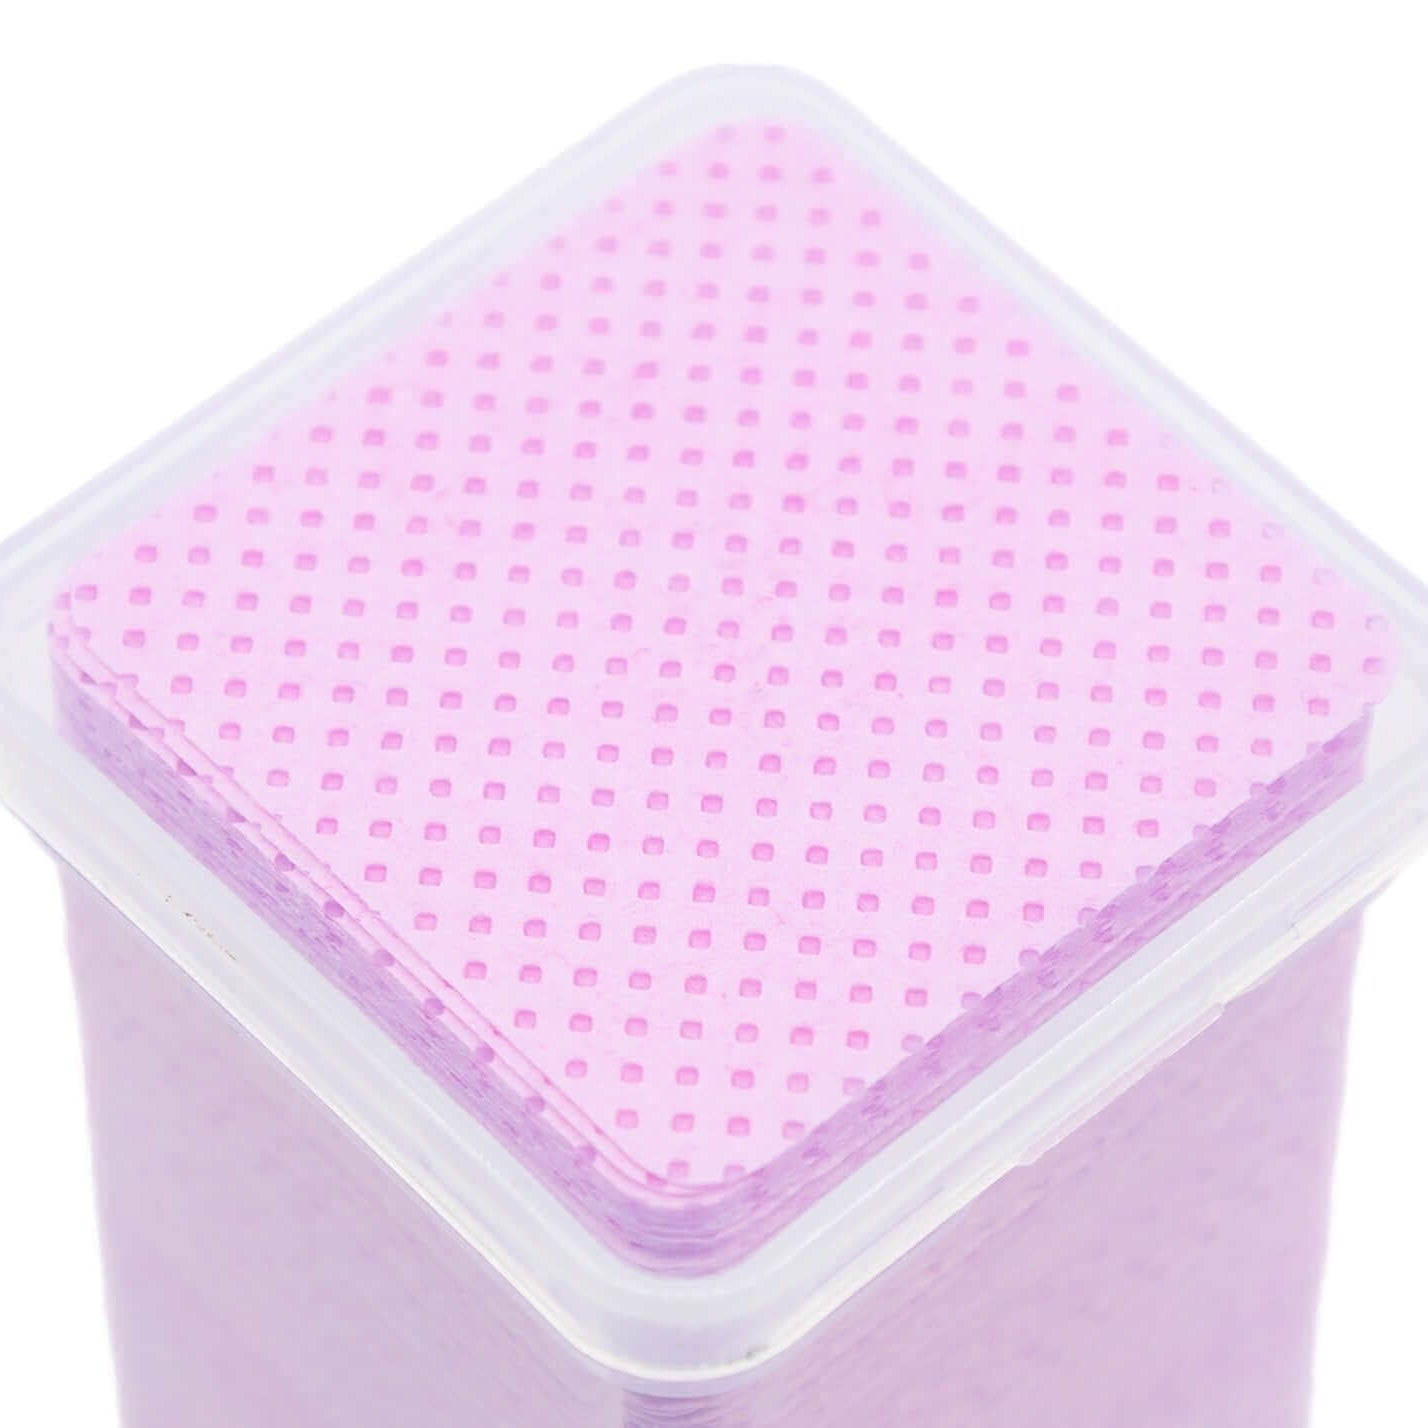 Zellettenbox Pink Grösse: Zelletten Pink Box 200 Stück, Zelletten Pink 540 Stück, Zelletten Pink 180 Stück